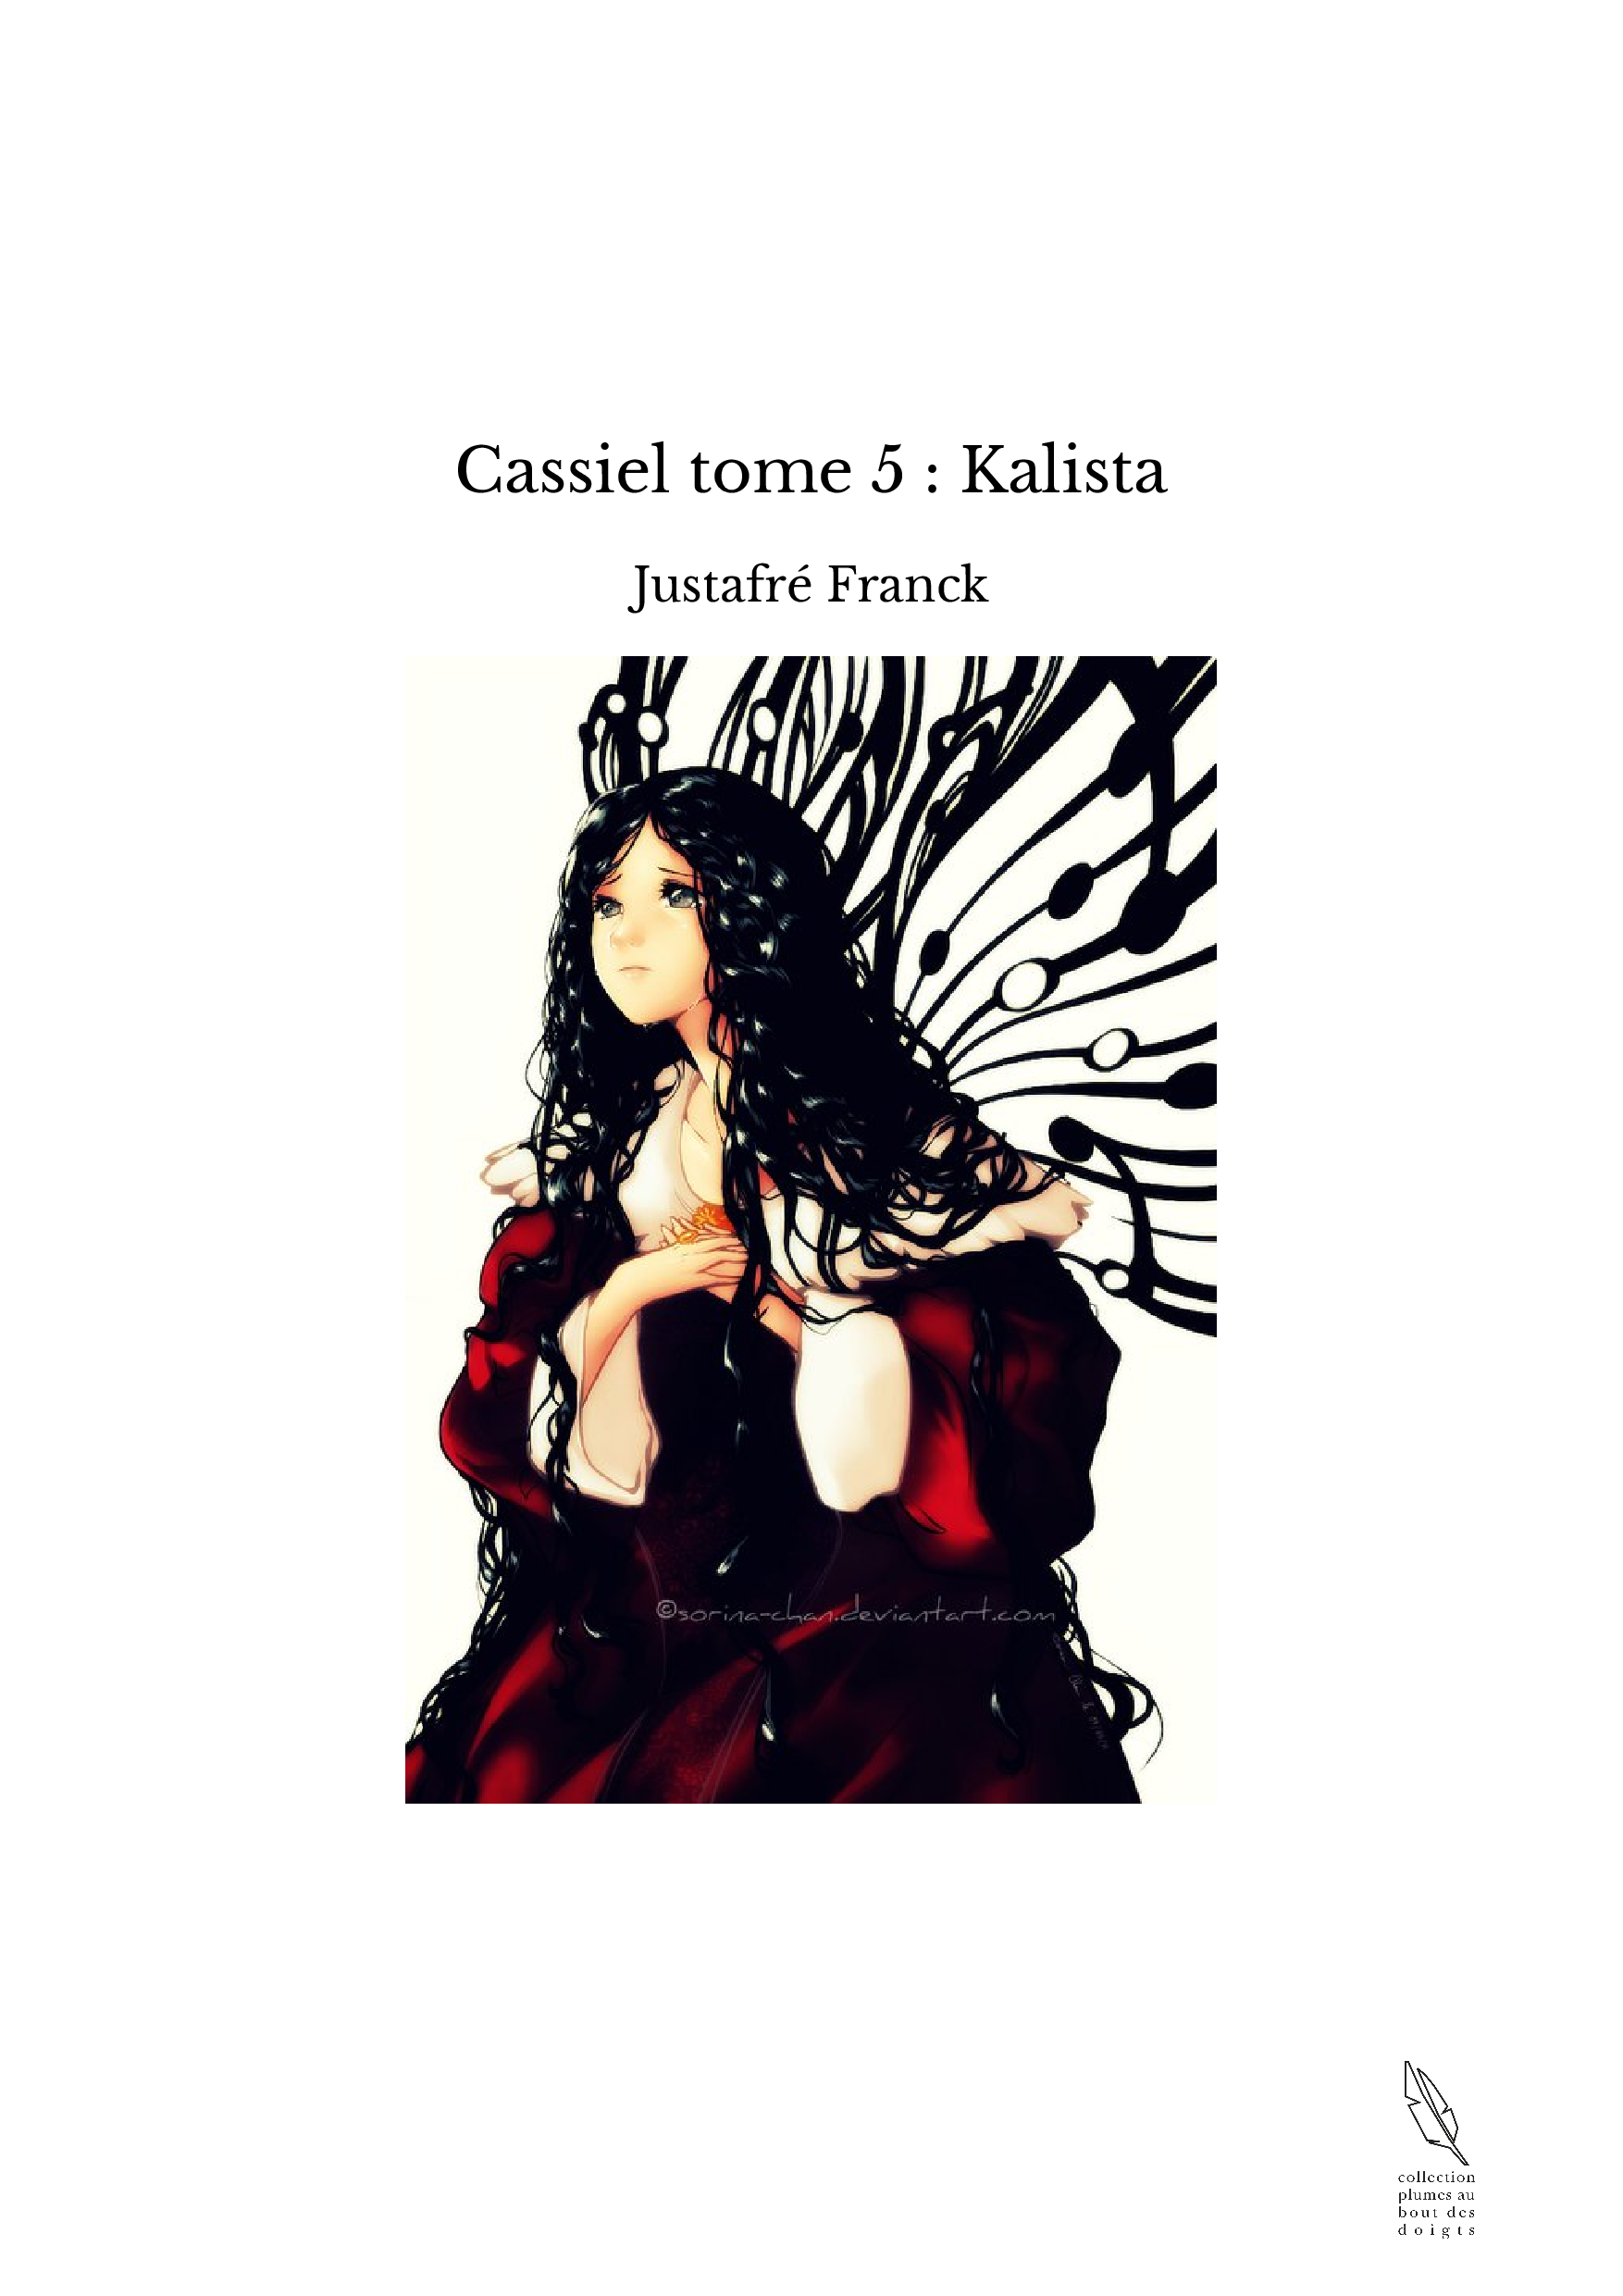 Cassiel tome 5 : Kalista